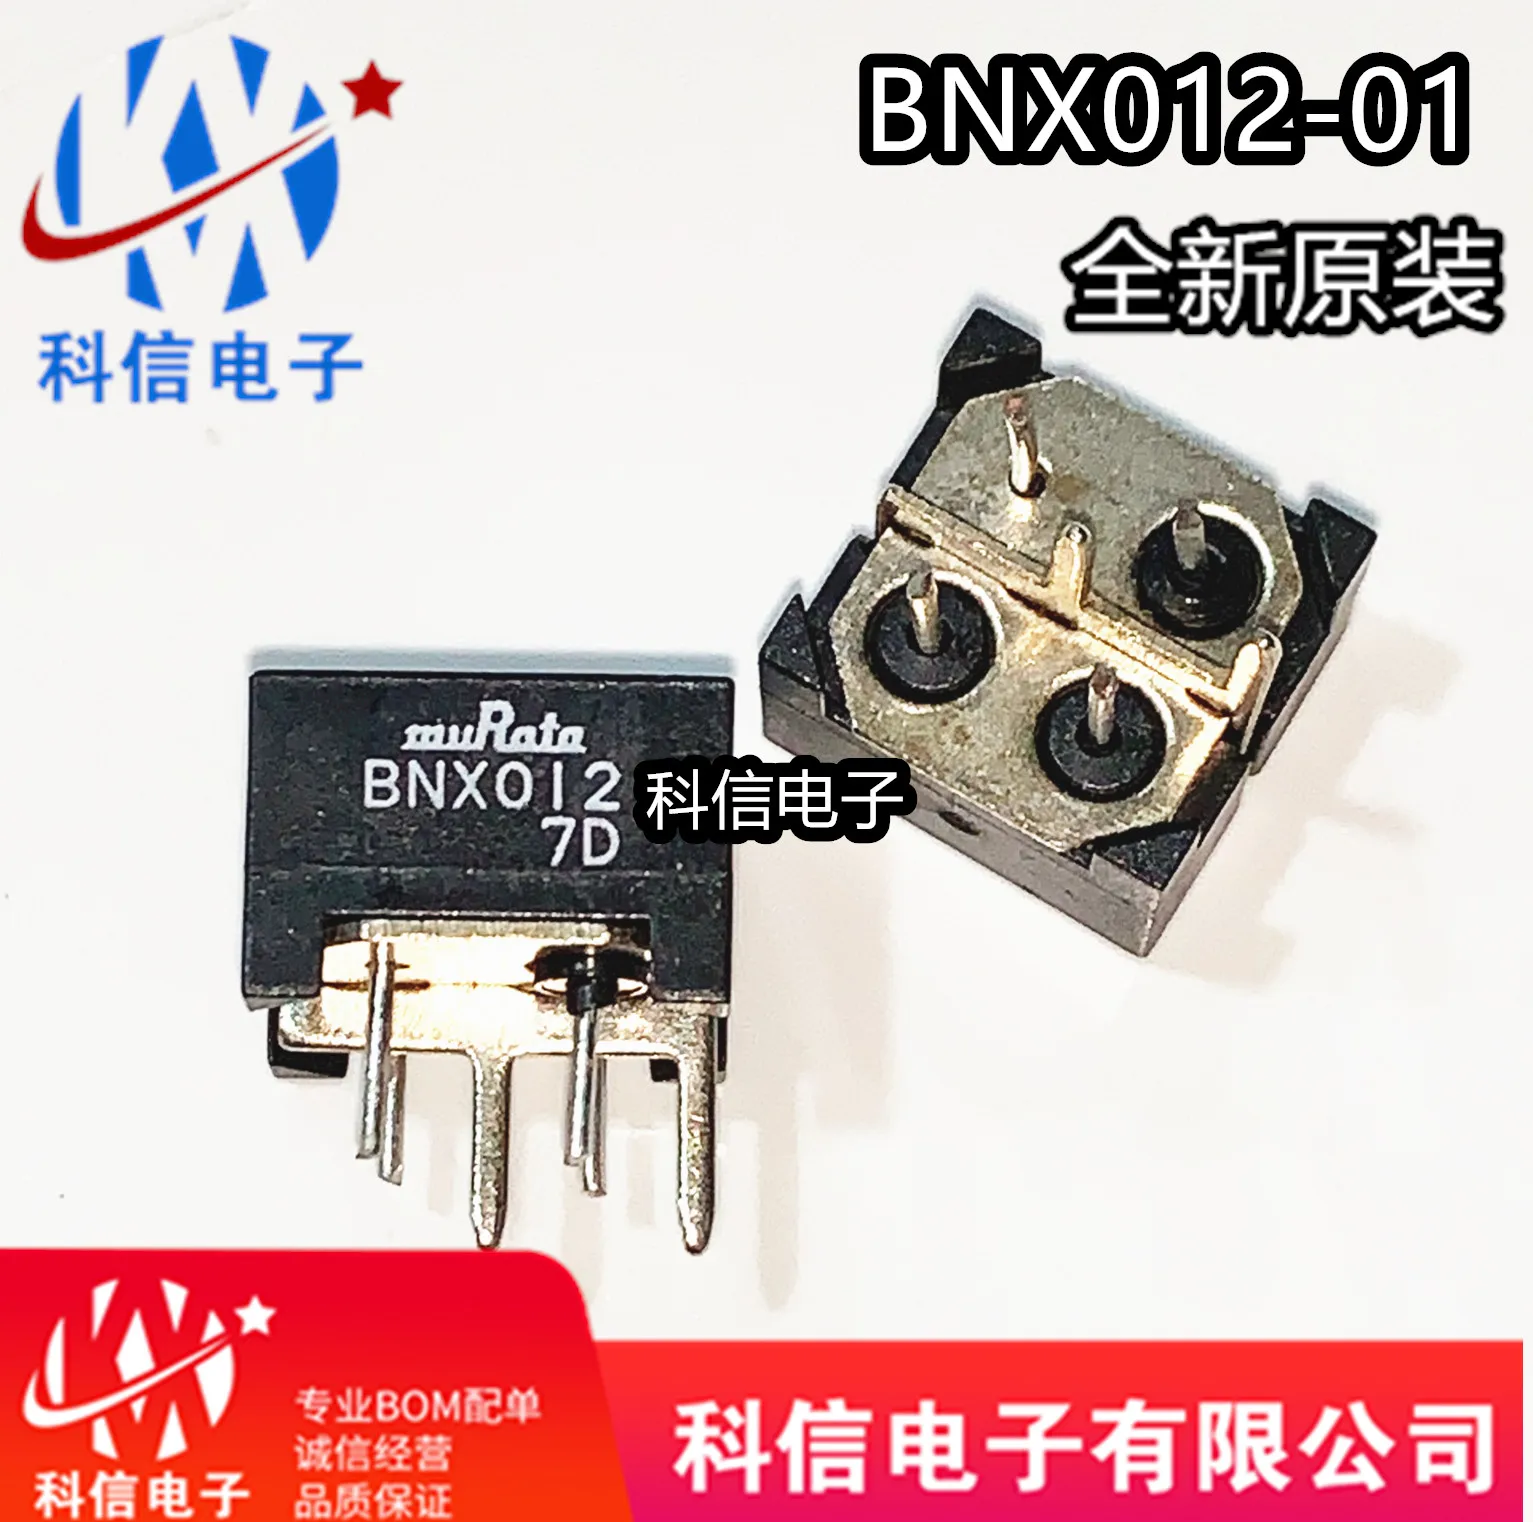 BNX012-01 EMI DIP BNX012 Оригинал, в наличии. Power IC